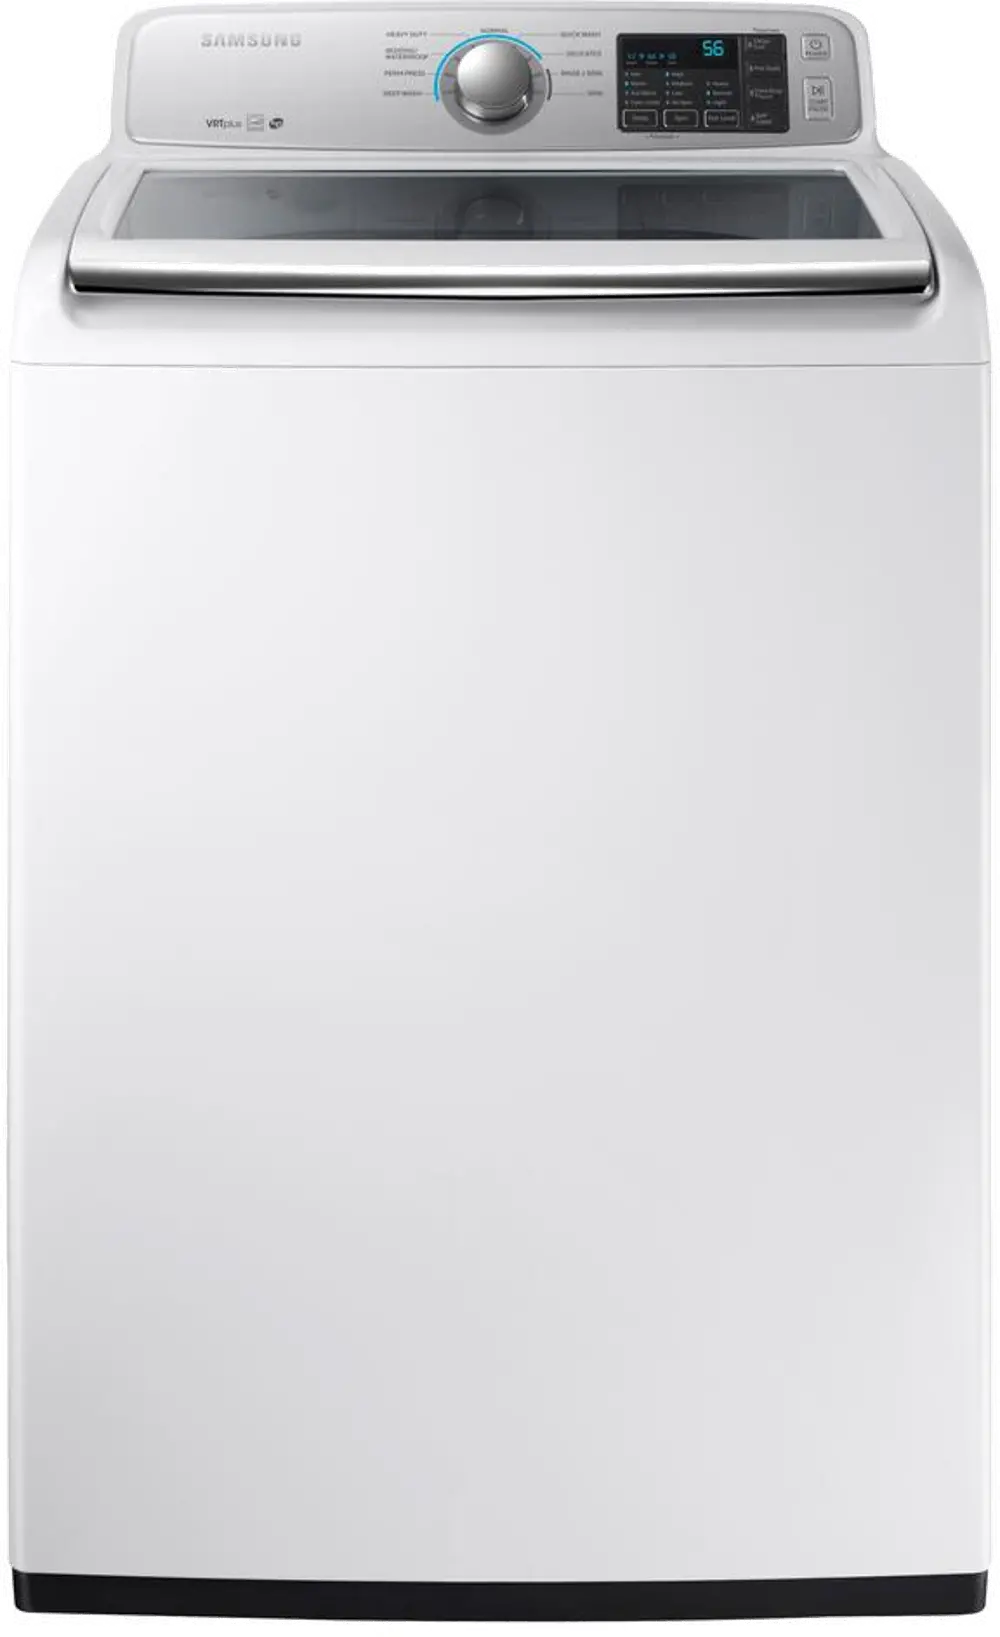 WA45M7050AW Samsung Top Load Washer - 4.5 cu. ft. White-1